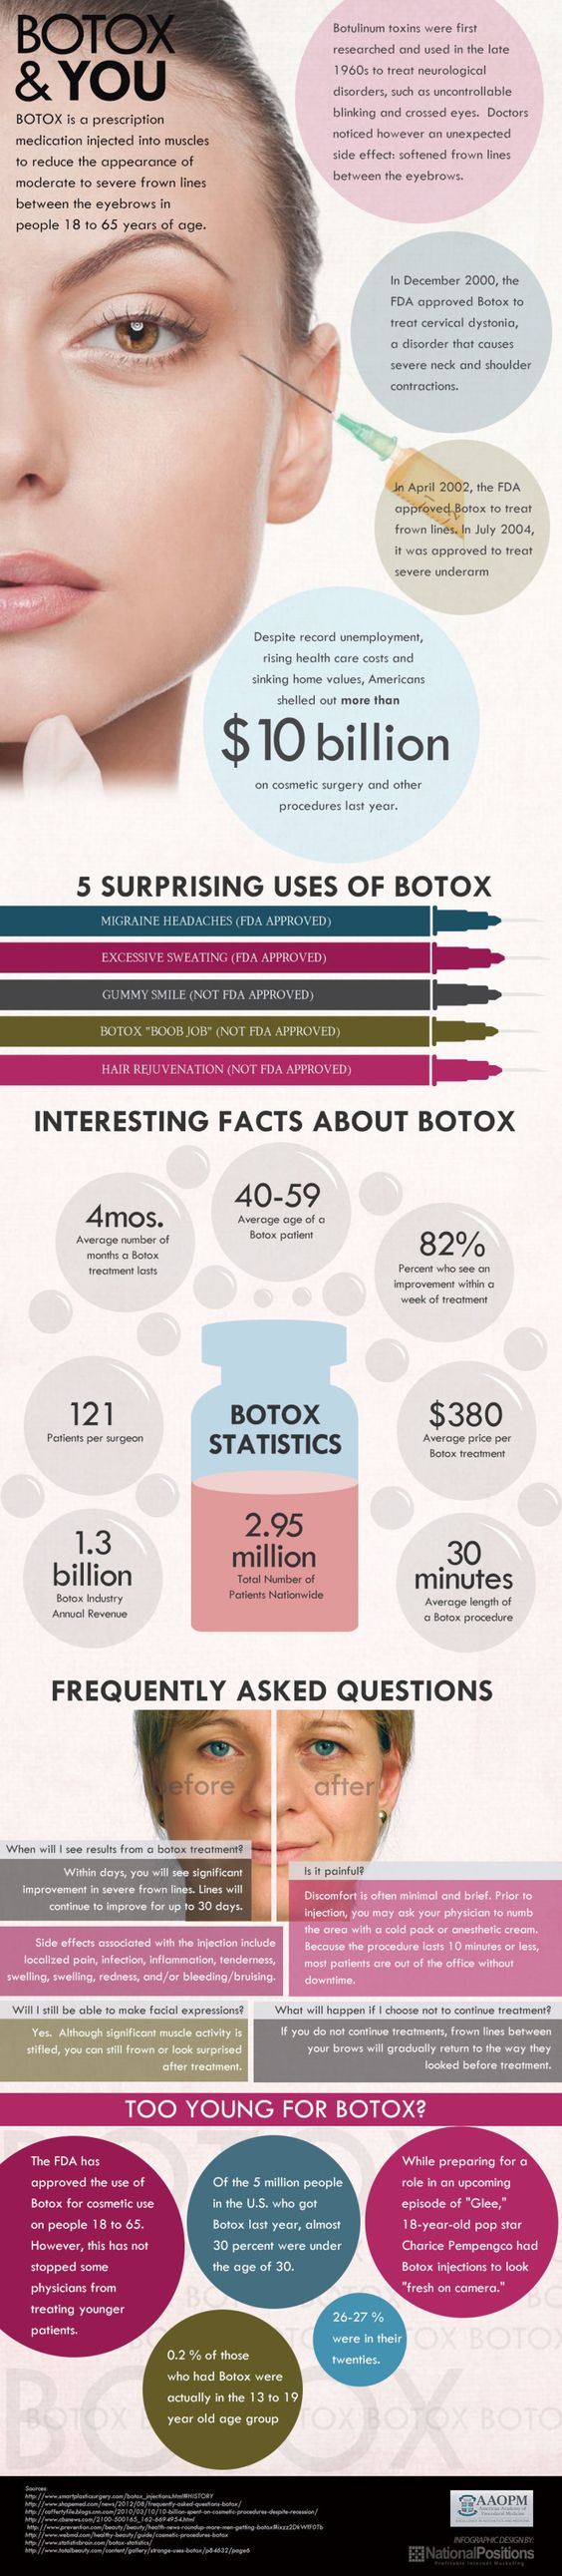 botox for anti aging